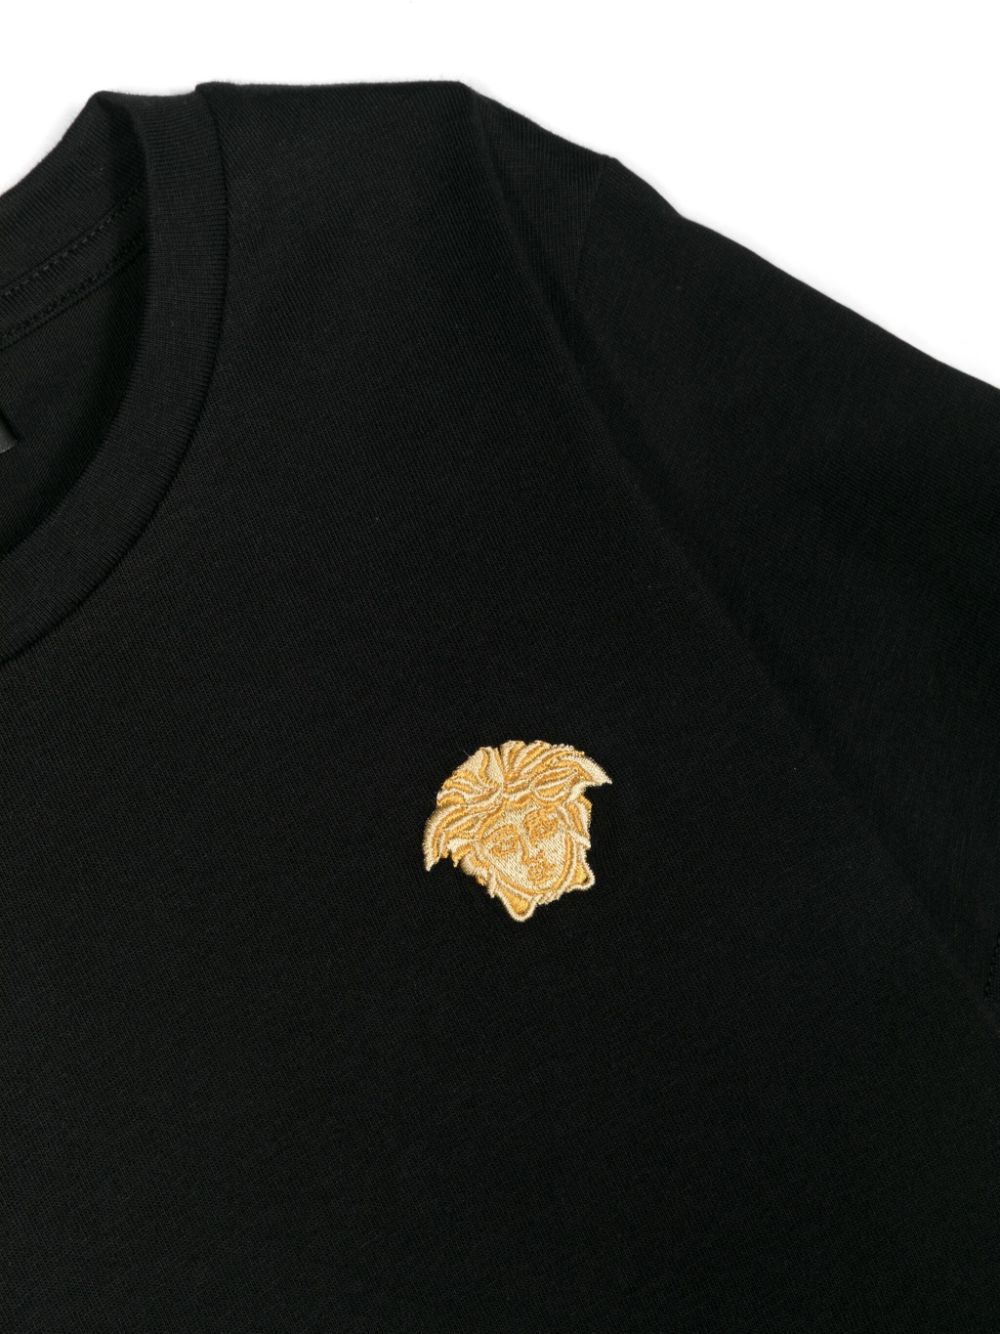 T-shirt unisex nera con logo 'Medusa'